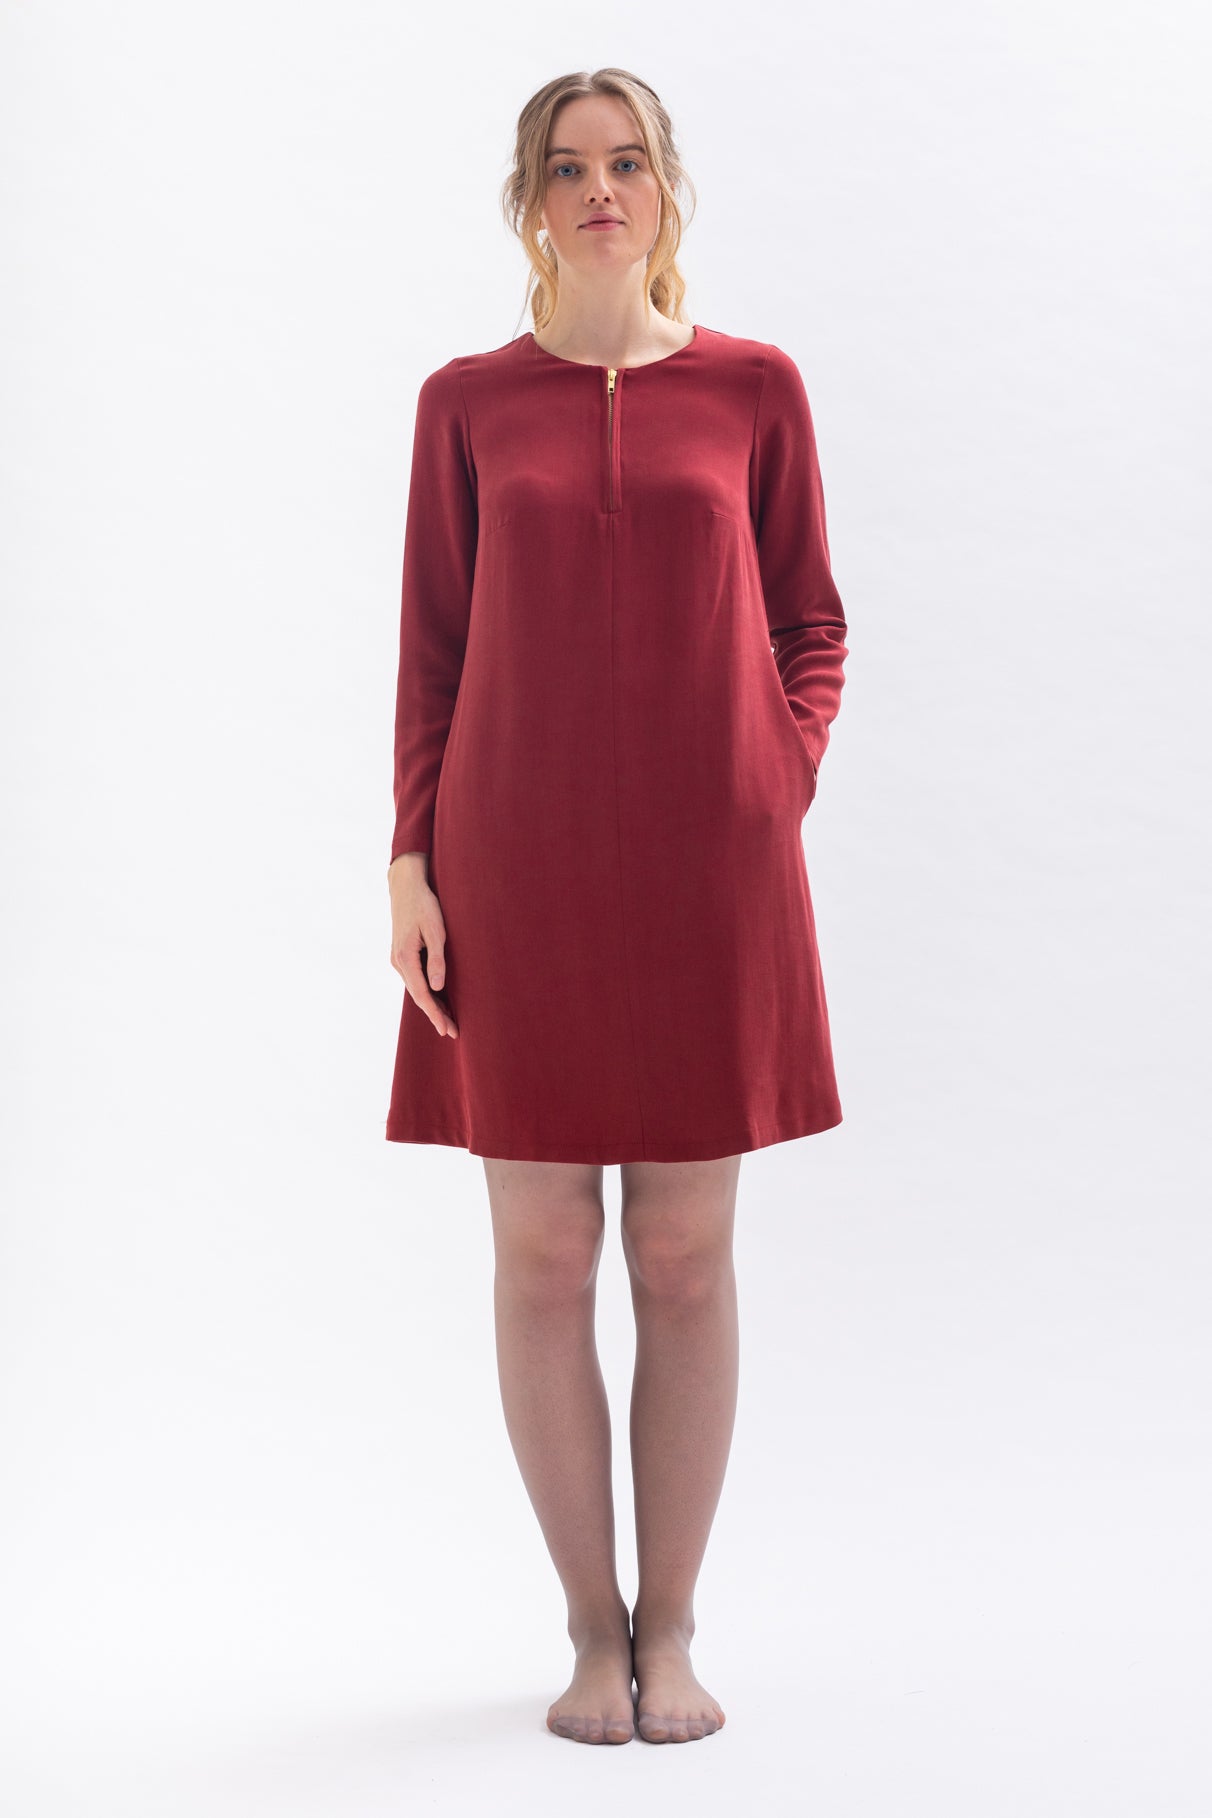 A-linen dress "KLAA-RA" in red made of Tencel